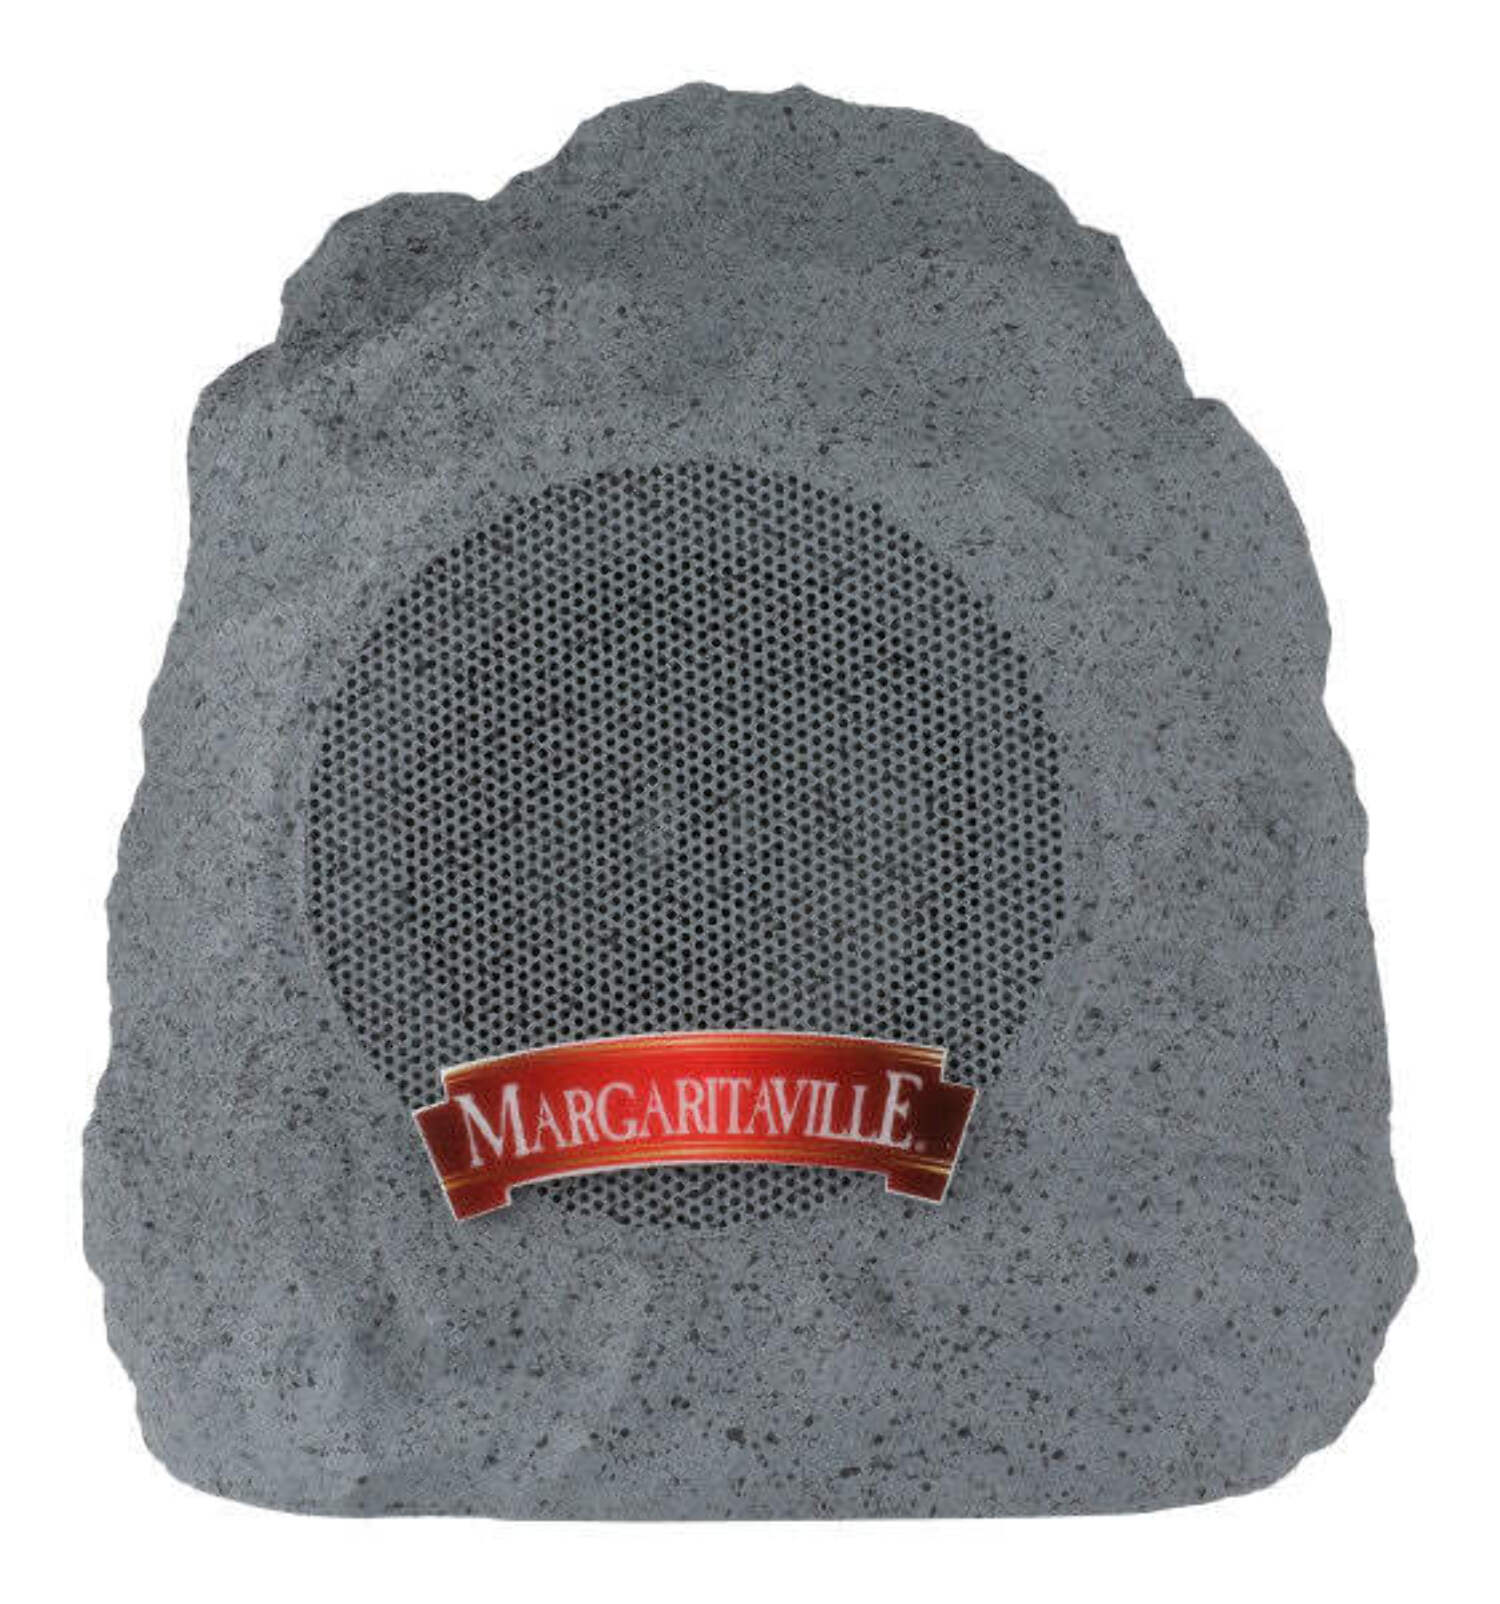 Margaritaville on the Rock Bluetooth Wireless Outdoor Rock Speaker - Gray - image 1 of 4